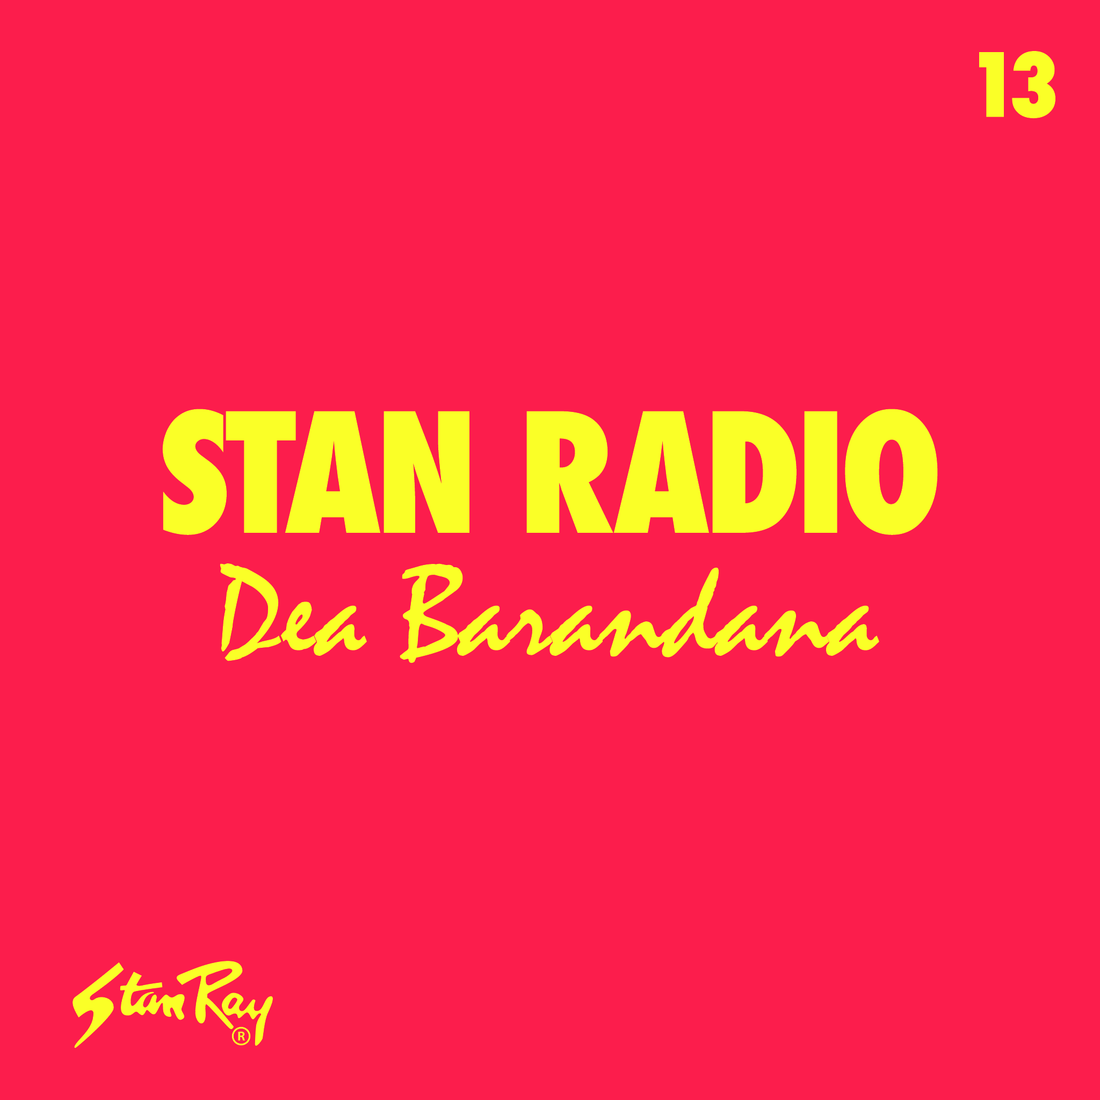 Stan Radio 13: Dea Barandana